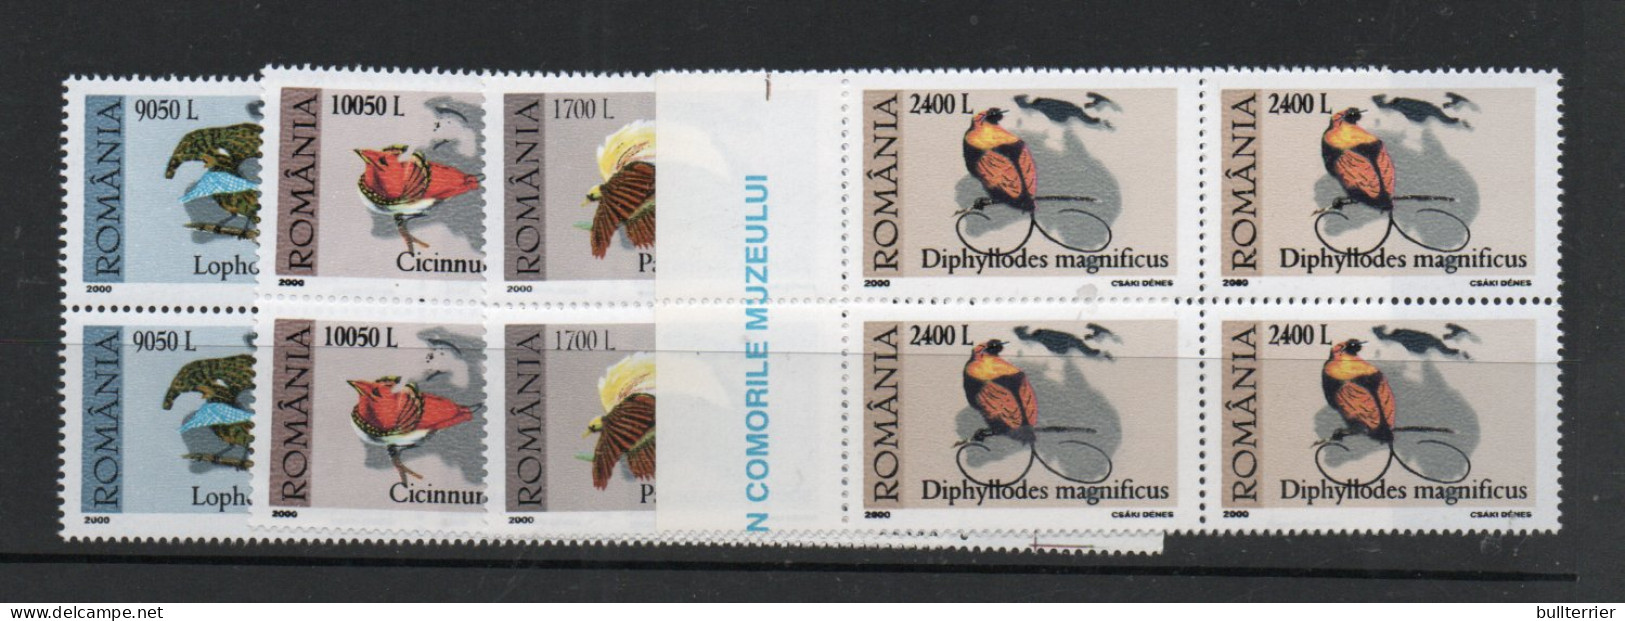 BIRDS  -  ROMANIA - 2000 - BIRDS OF PARADISE  SET OF 4 IN BLOCKS OF 4  MINT NEVER HINGED, SG CAT £23.60 - Columbiformes